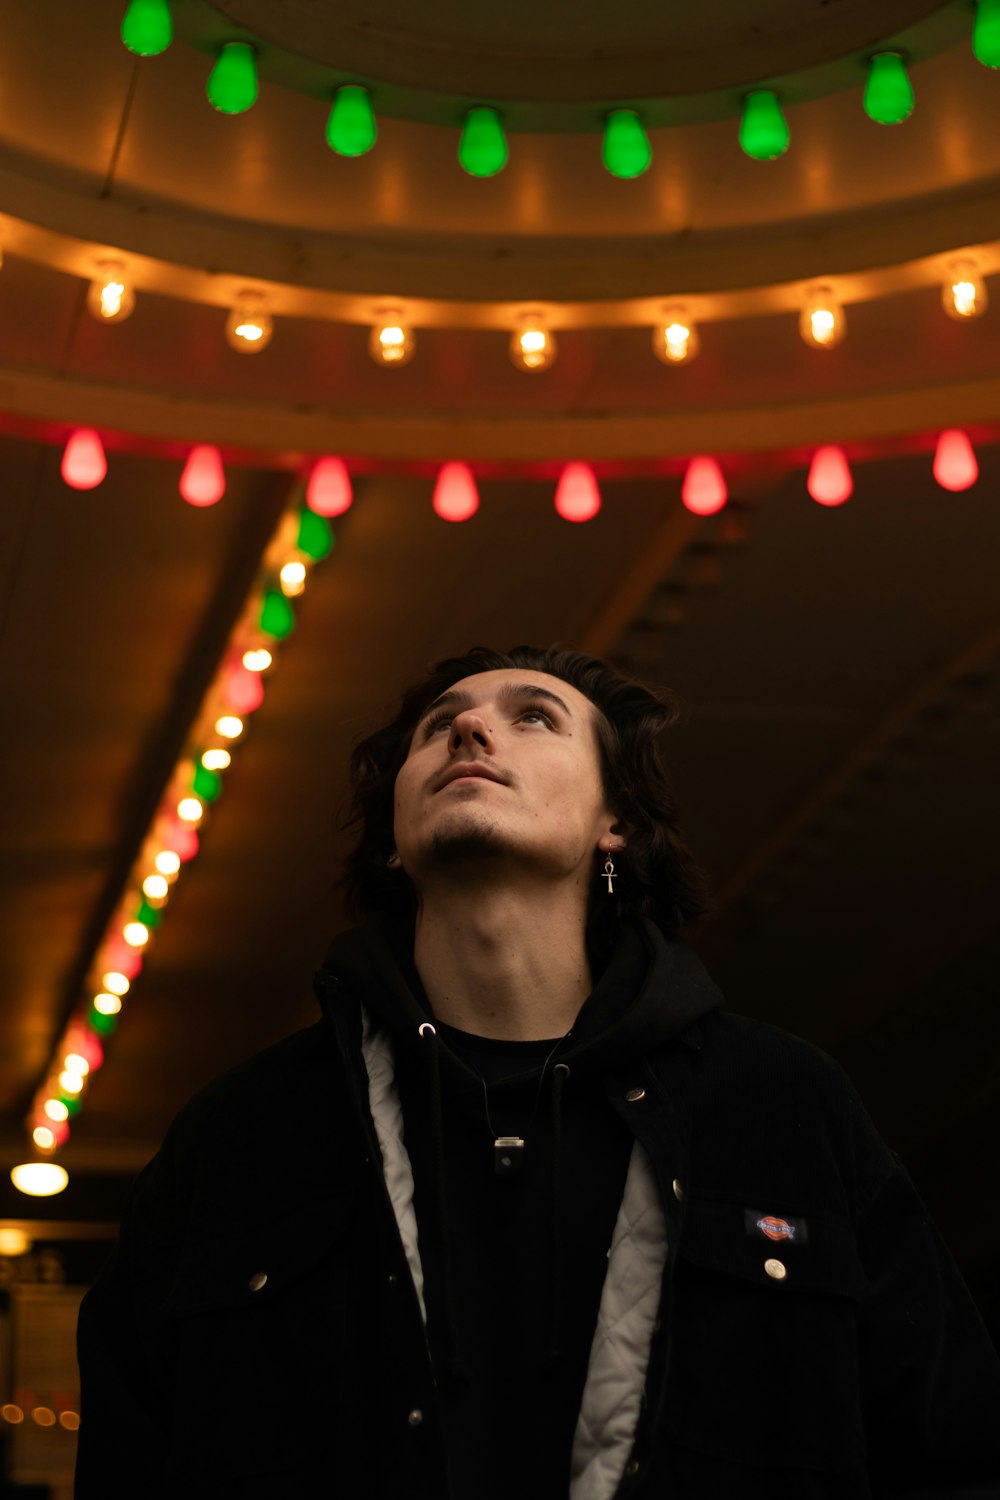 man in black jacket standing near lighted string lights